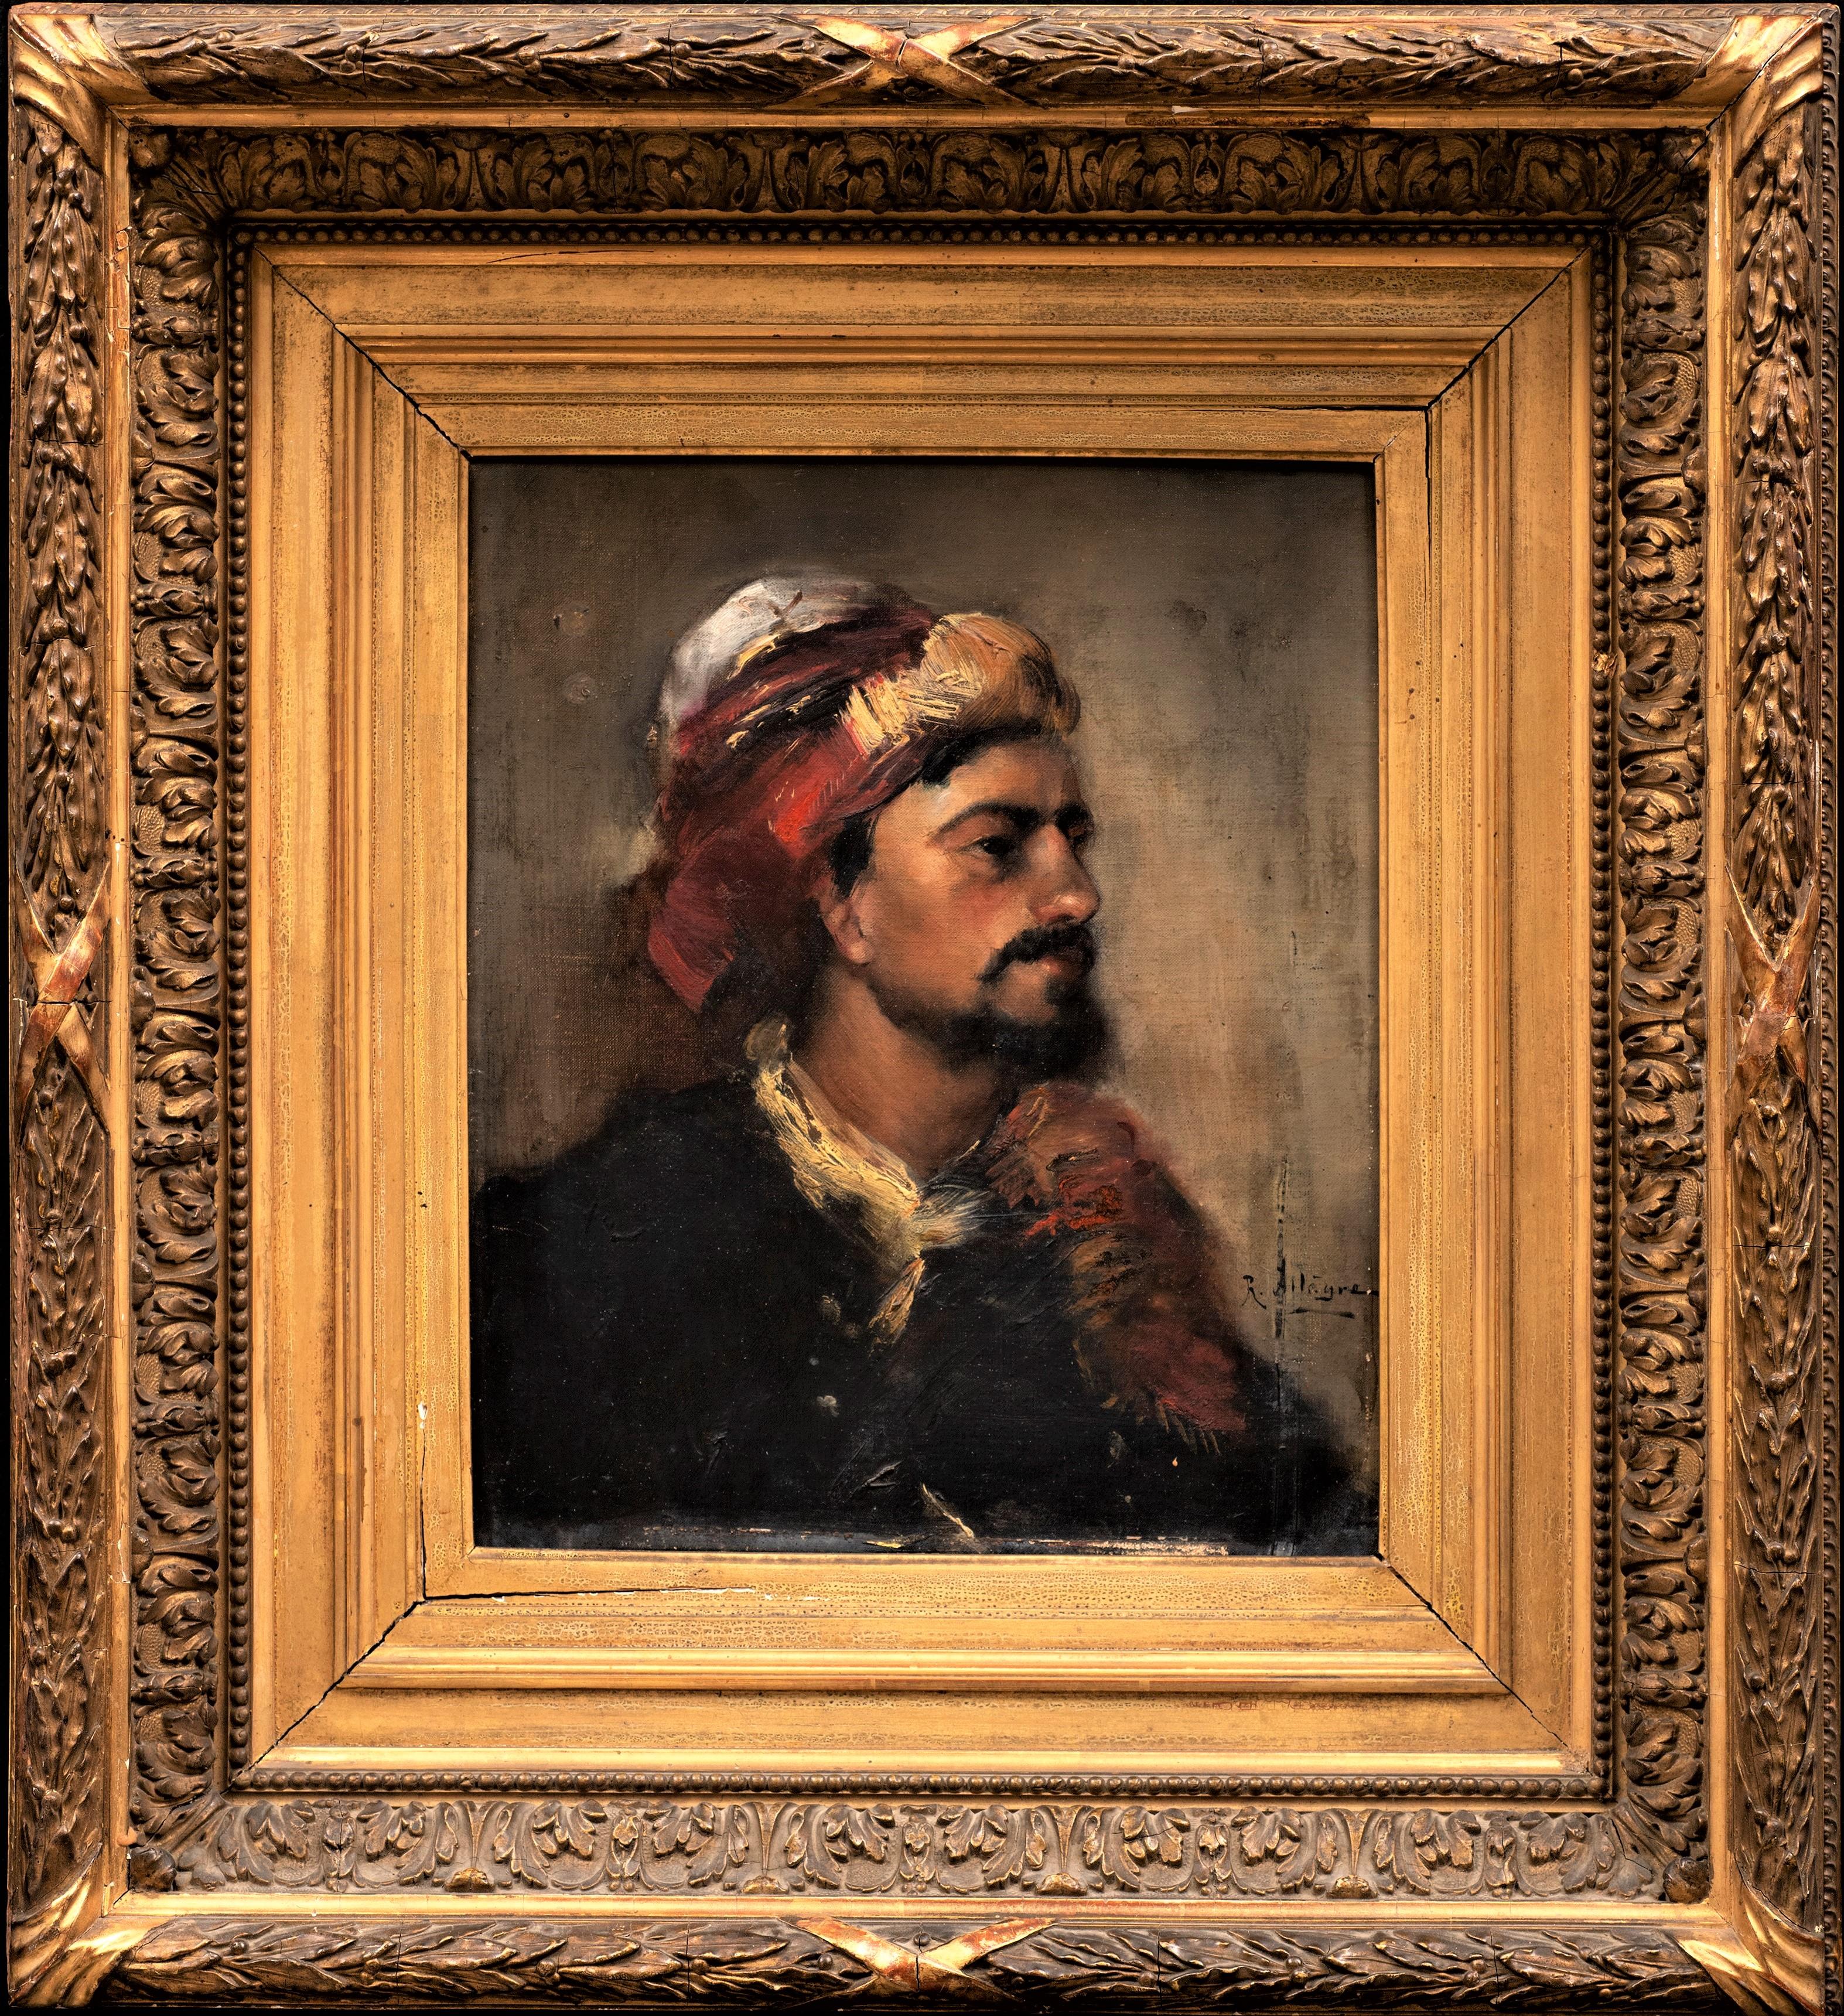 Raymond Allegre Portrait Painting - Orientalist Painting "The Man in the Turban" Raymond Allègre (France, 1857-1933)